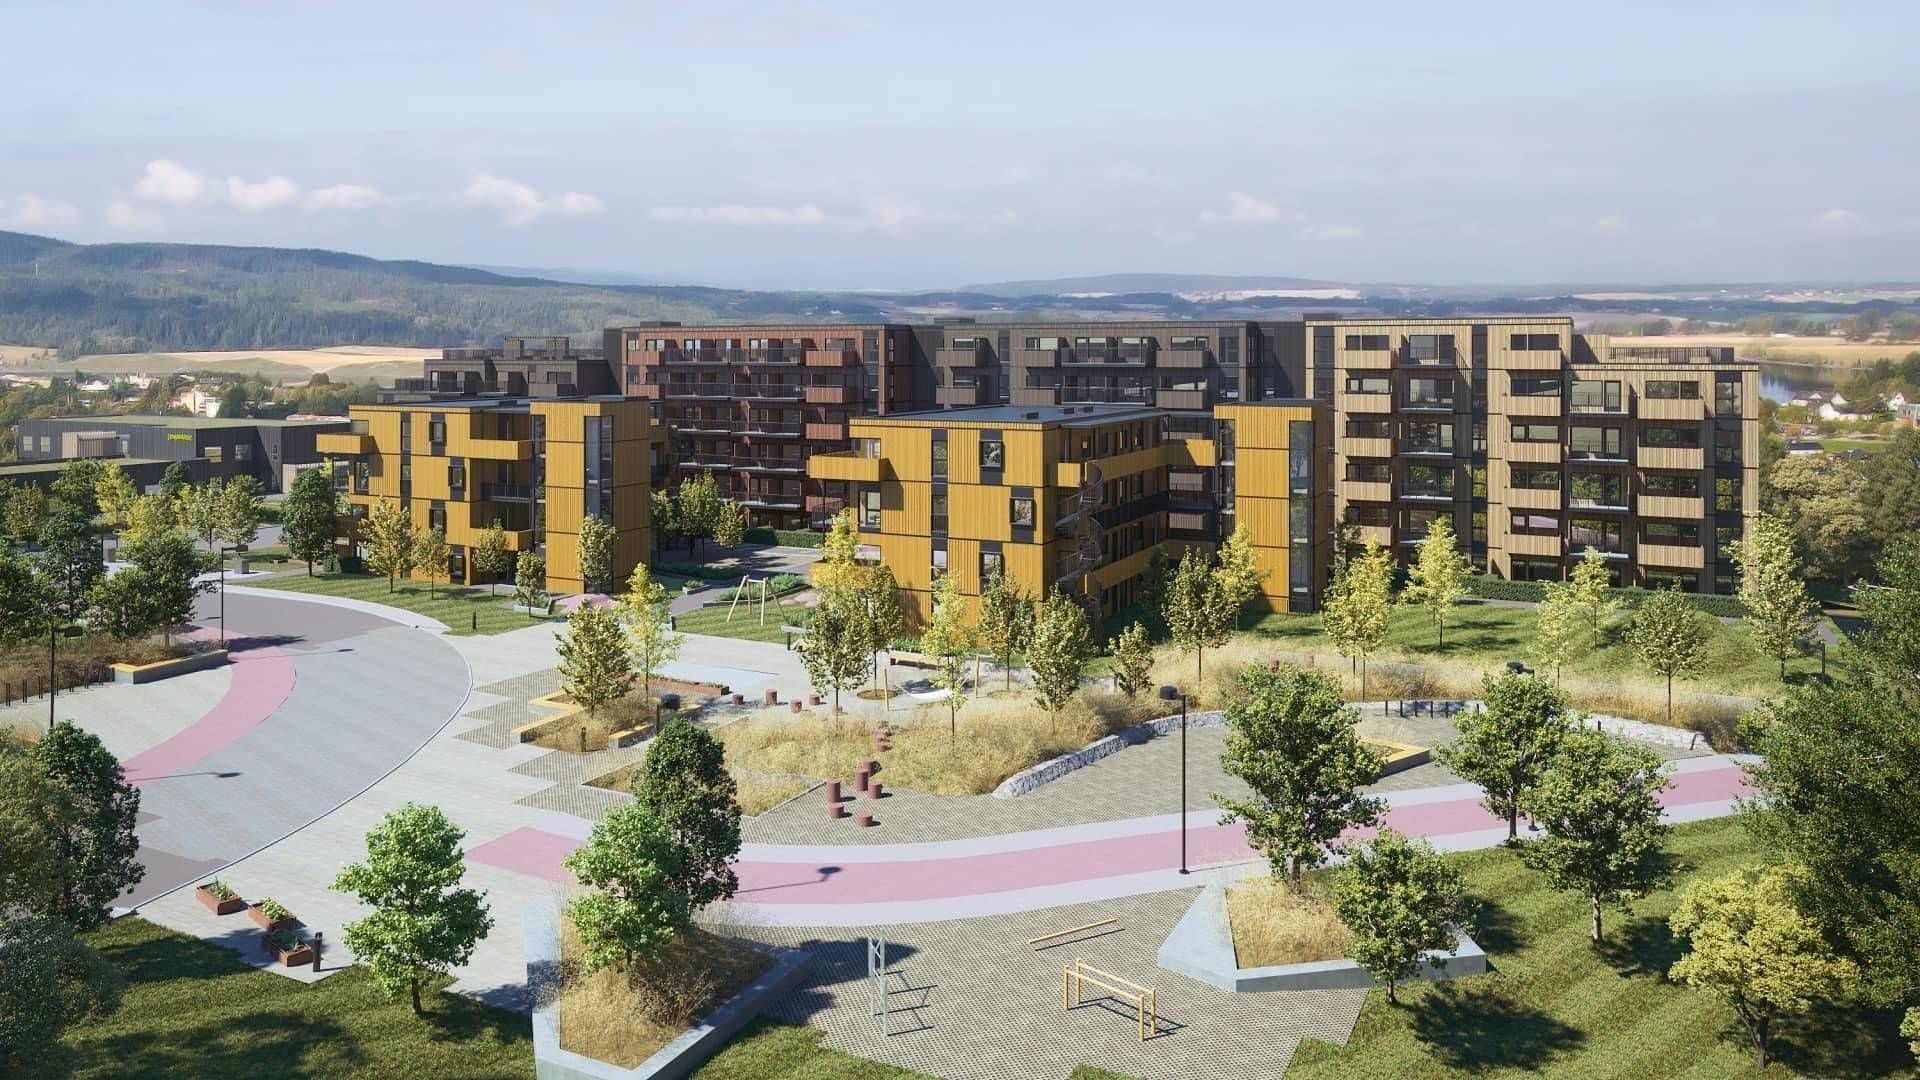 STOPPET: Fossumlunden skulle bygges like ved Sørumsand i Lillestrøm. Totalt var det planlagt 142 leiligheter fordelt over seks bygg. | Foto: Bonum